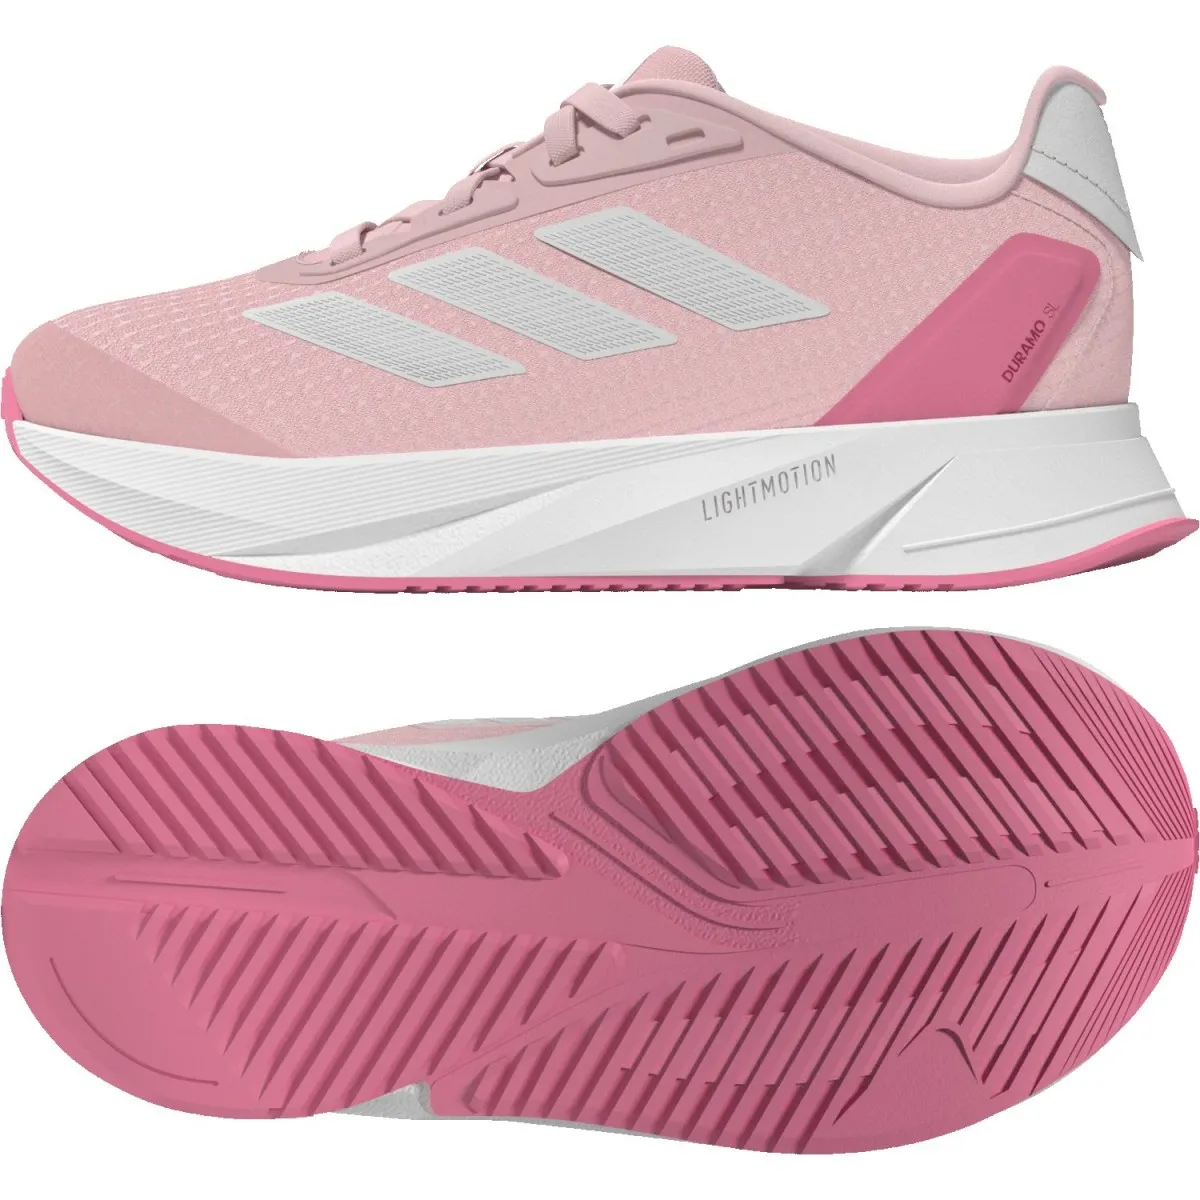 adidas Duramo superlight Teenie chaussures rose